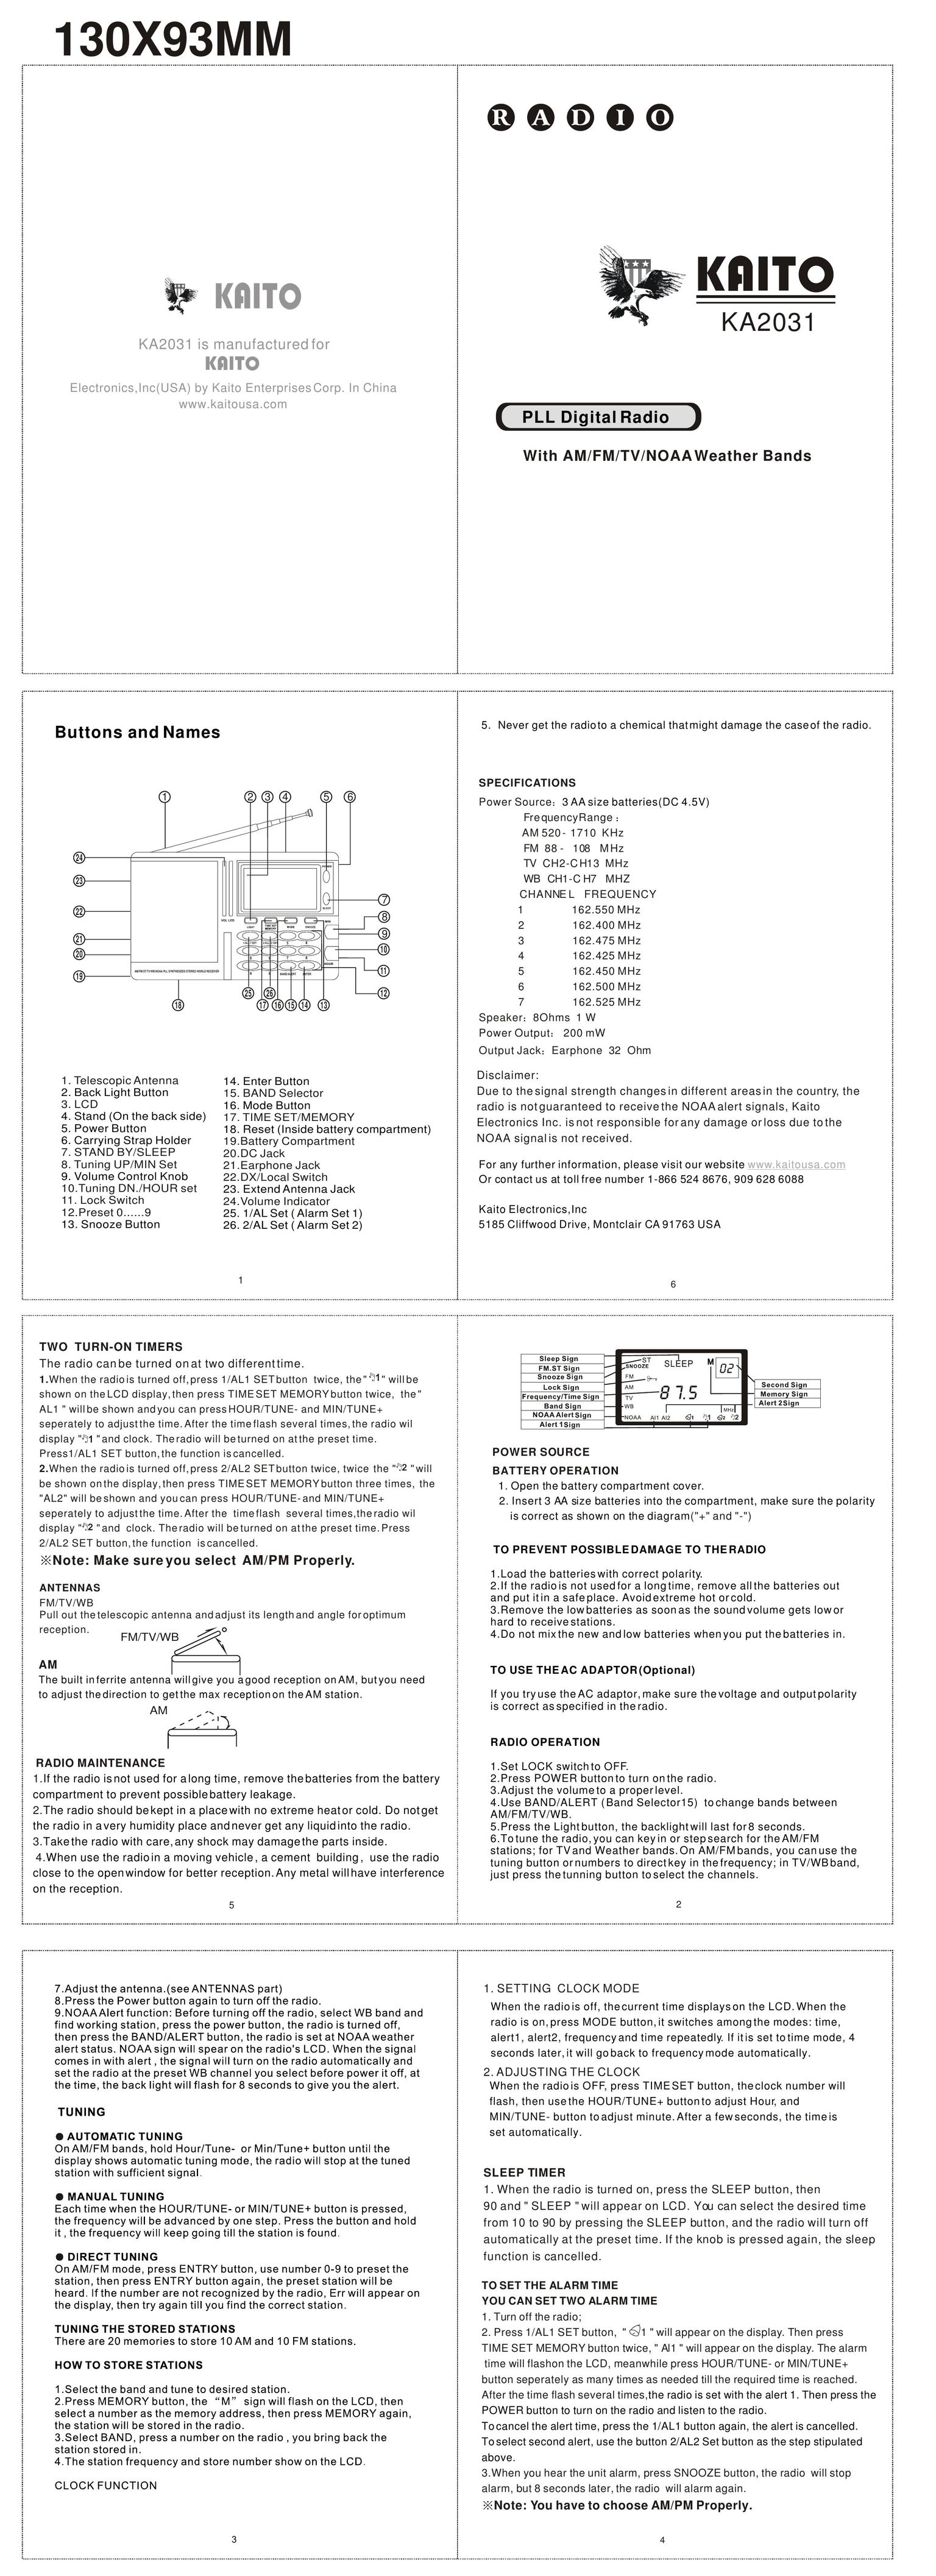 Kaito electronic KA2031 Radio User Manual